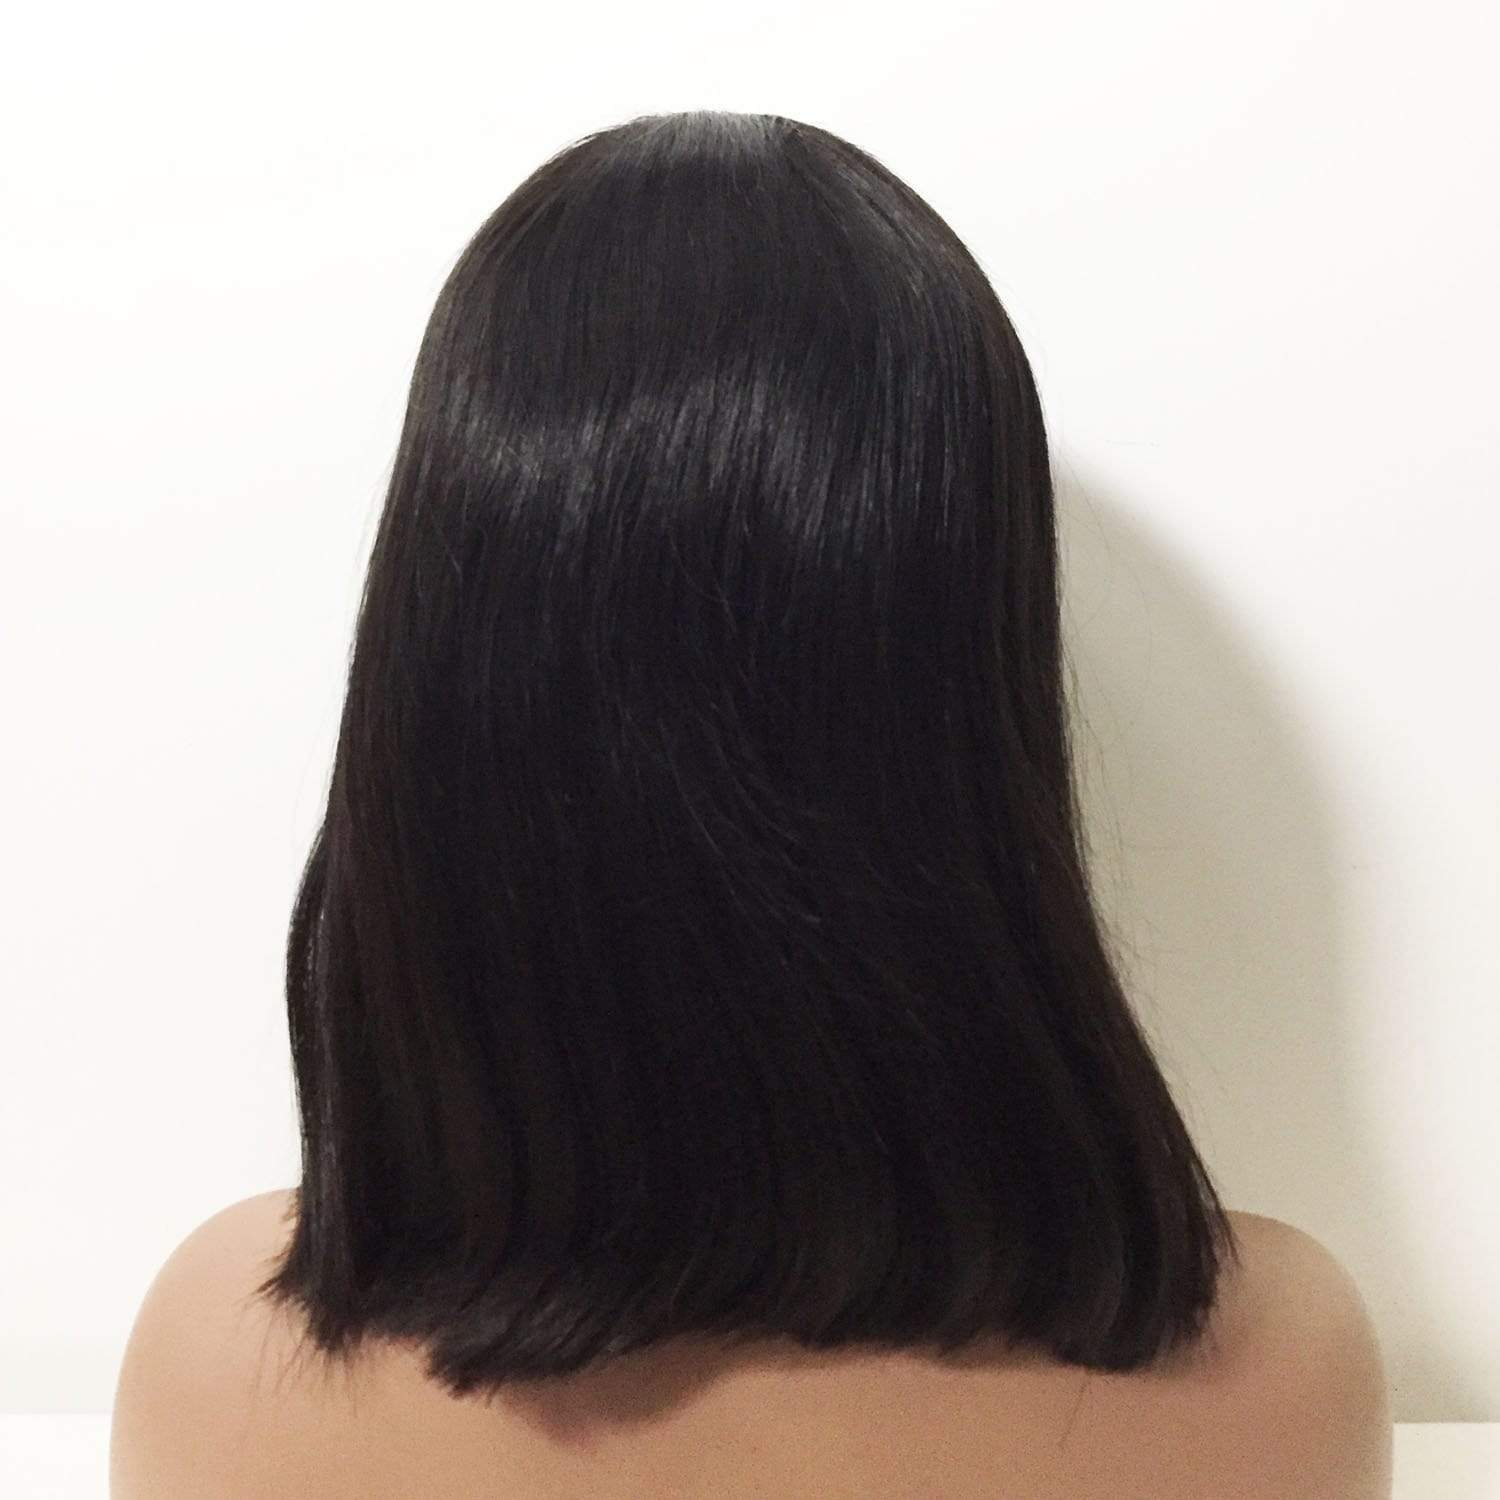 nevermindyrhead Women Black Human Hair Lace Front Medium Length Straight Fringe Bangs Wig